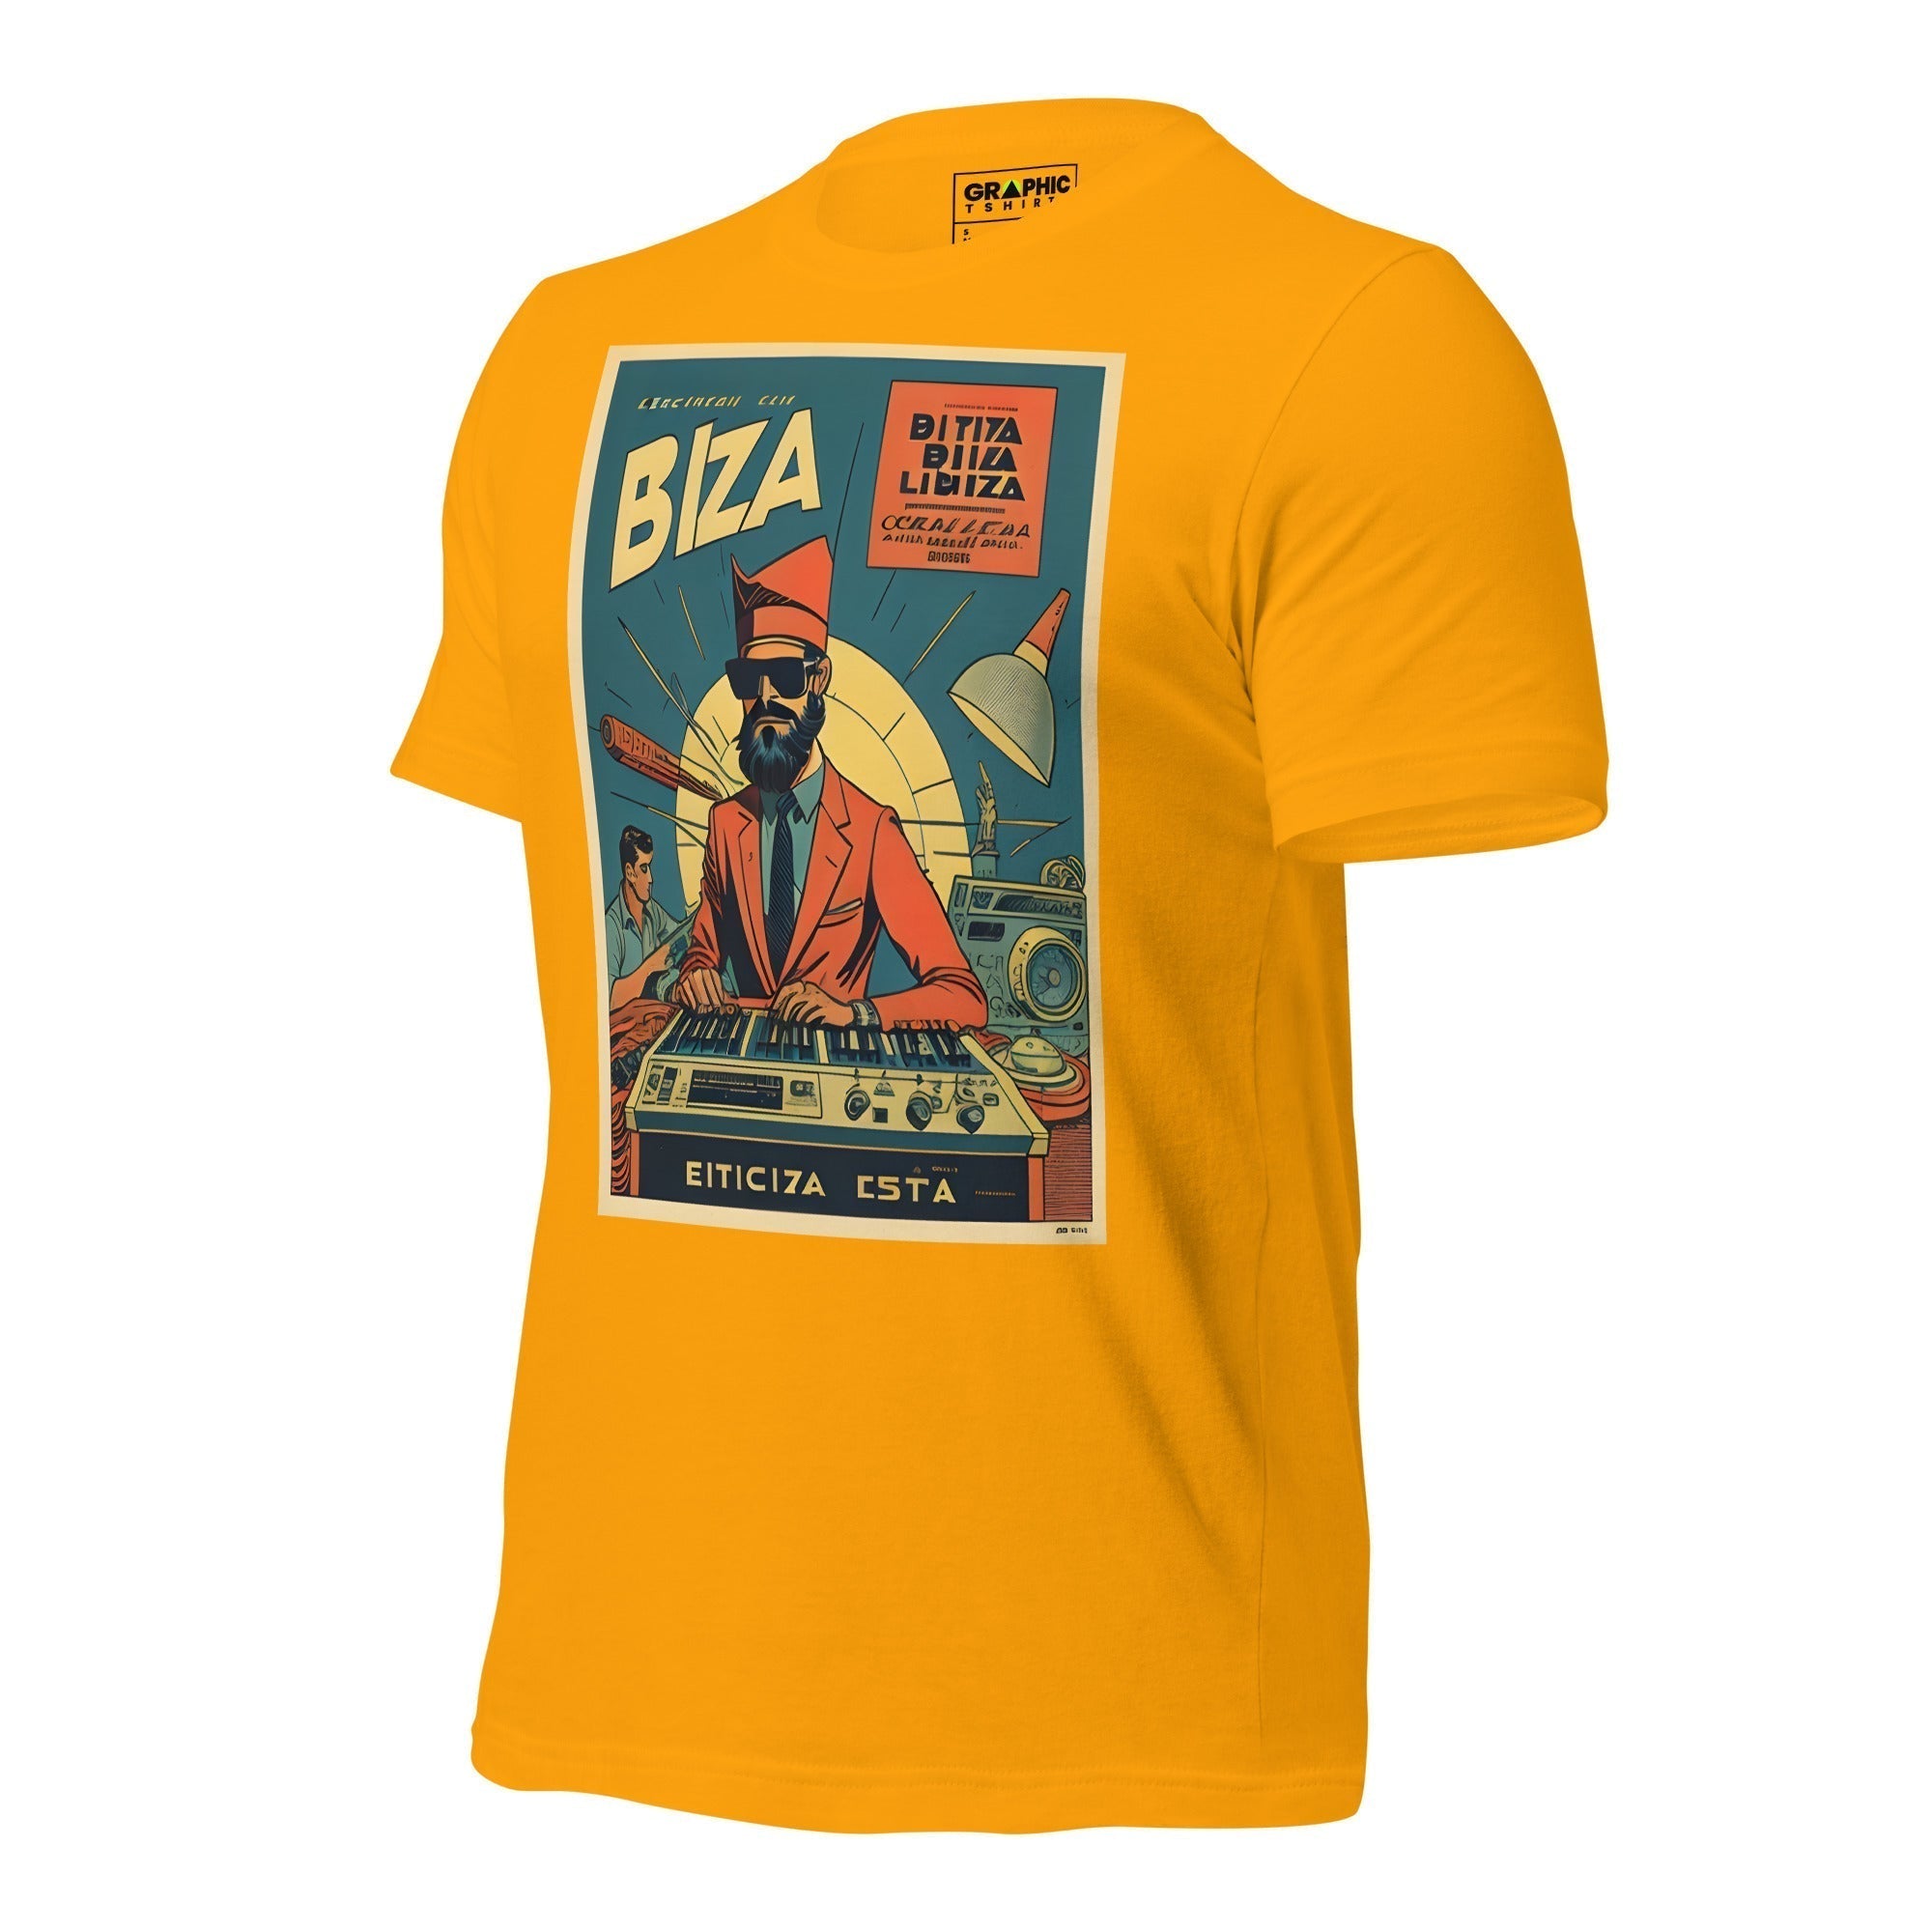 Unisex Crew Neck T-Shirt - Ibiza Night Club Heroes Comic Series v.47 - GRAPHIC T-SHIRTS